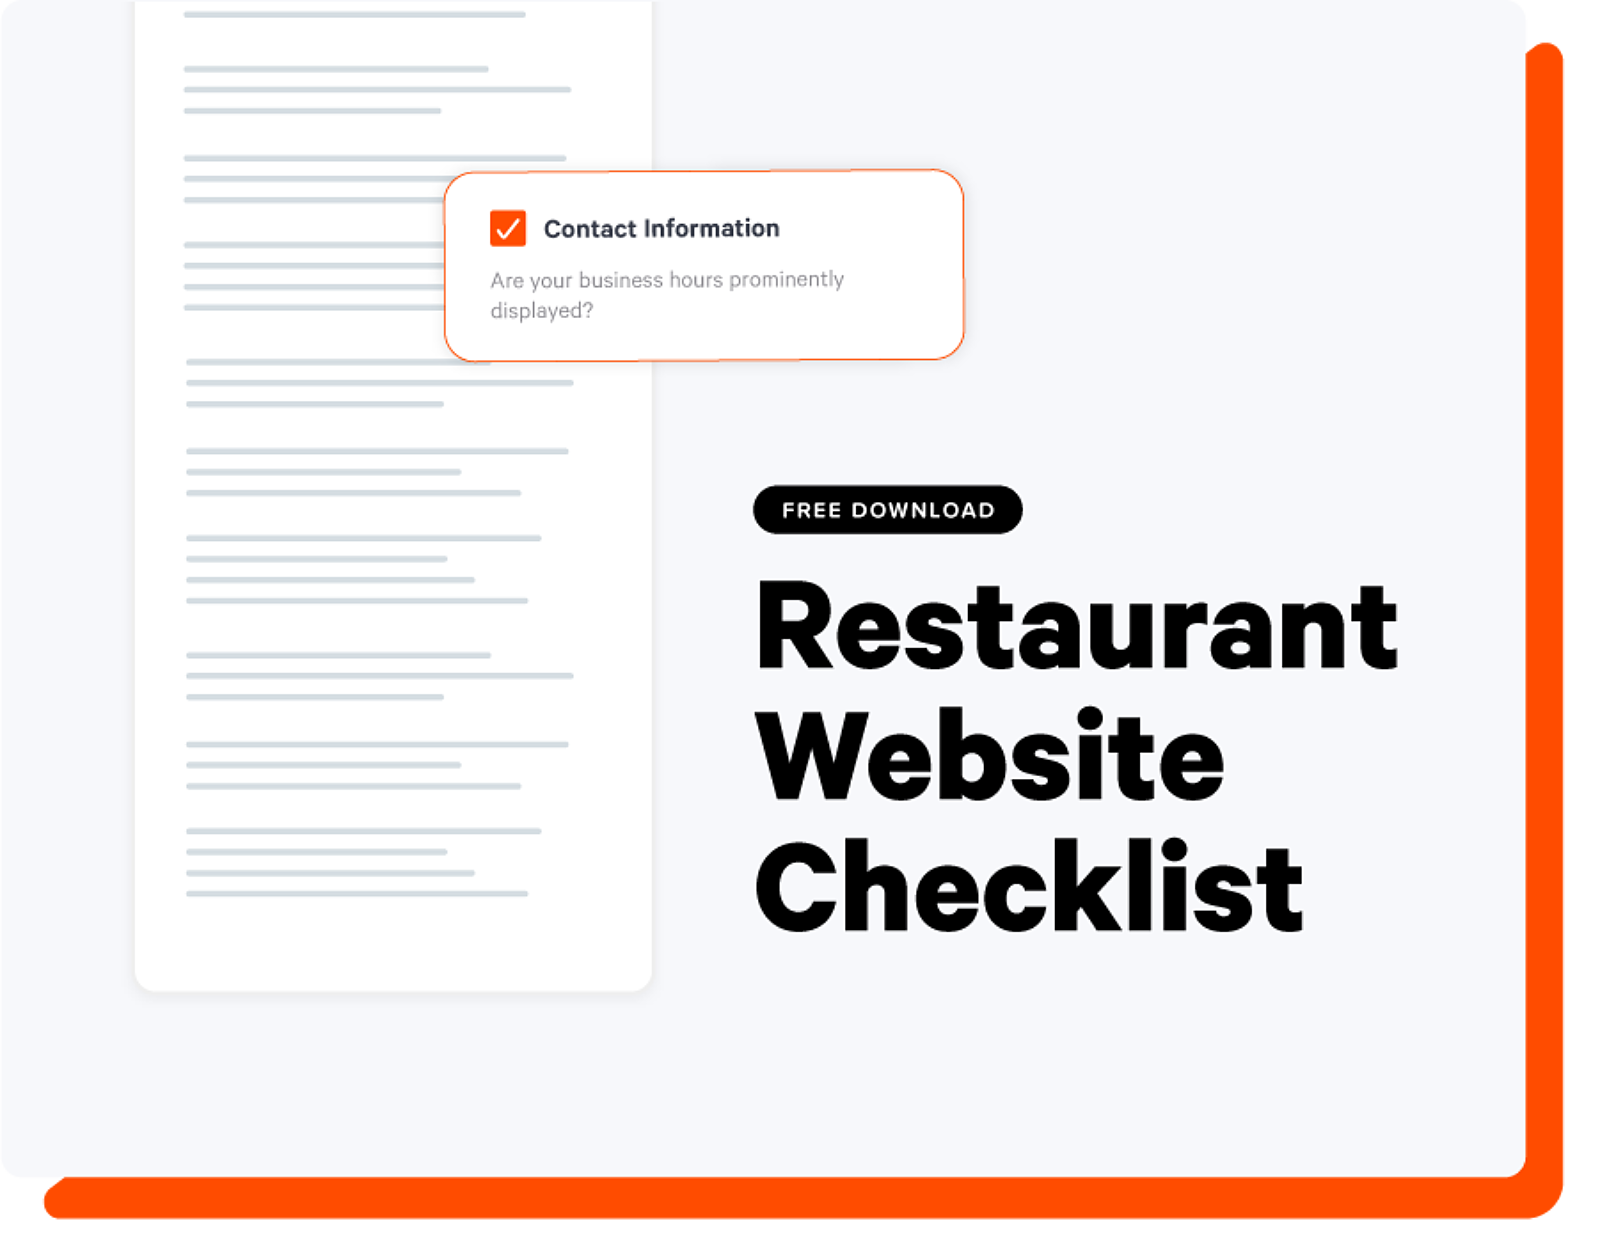 Restaurant Website Checklist Landing Page Thumbnail